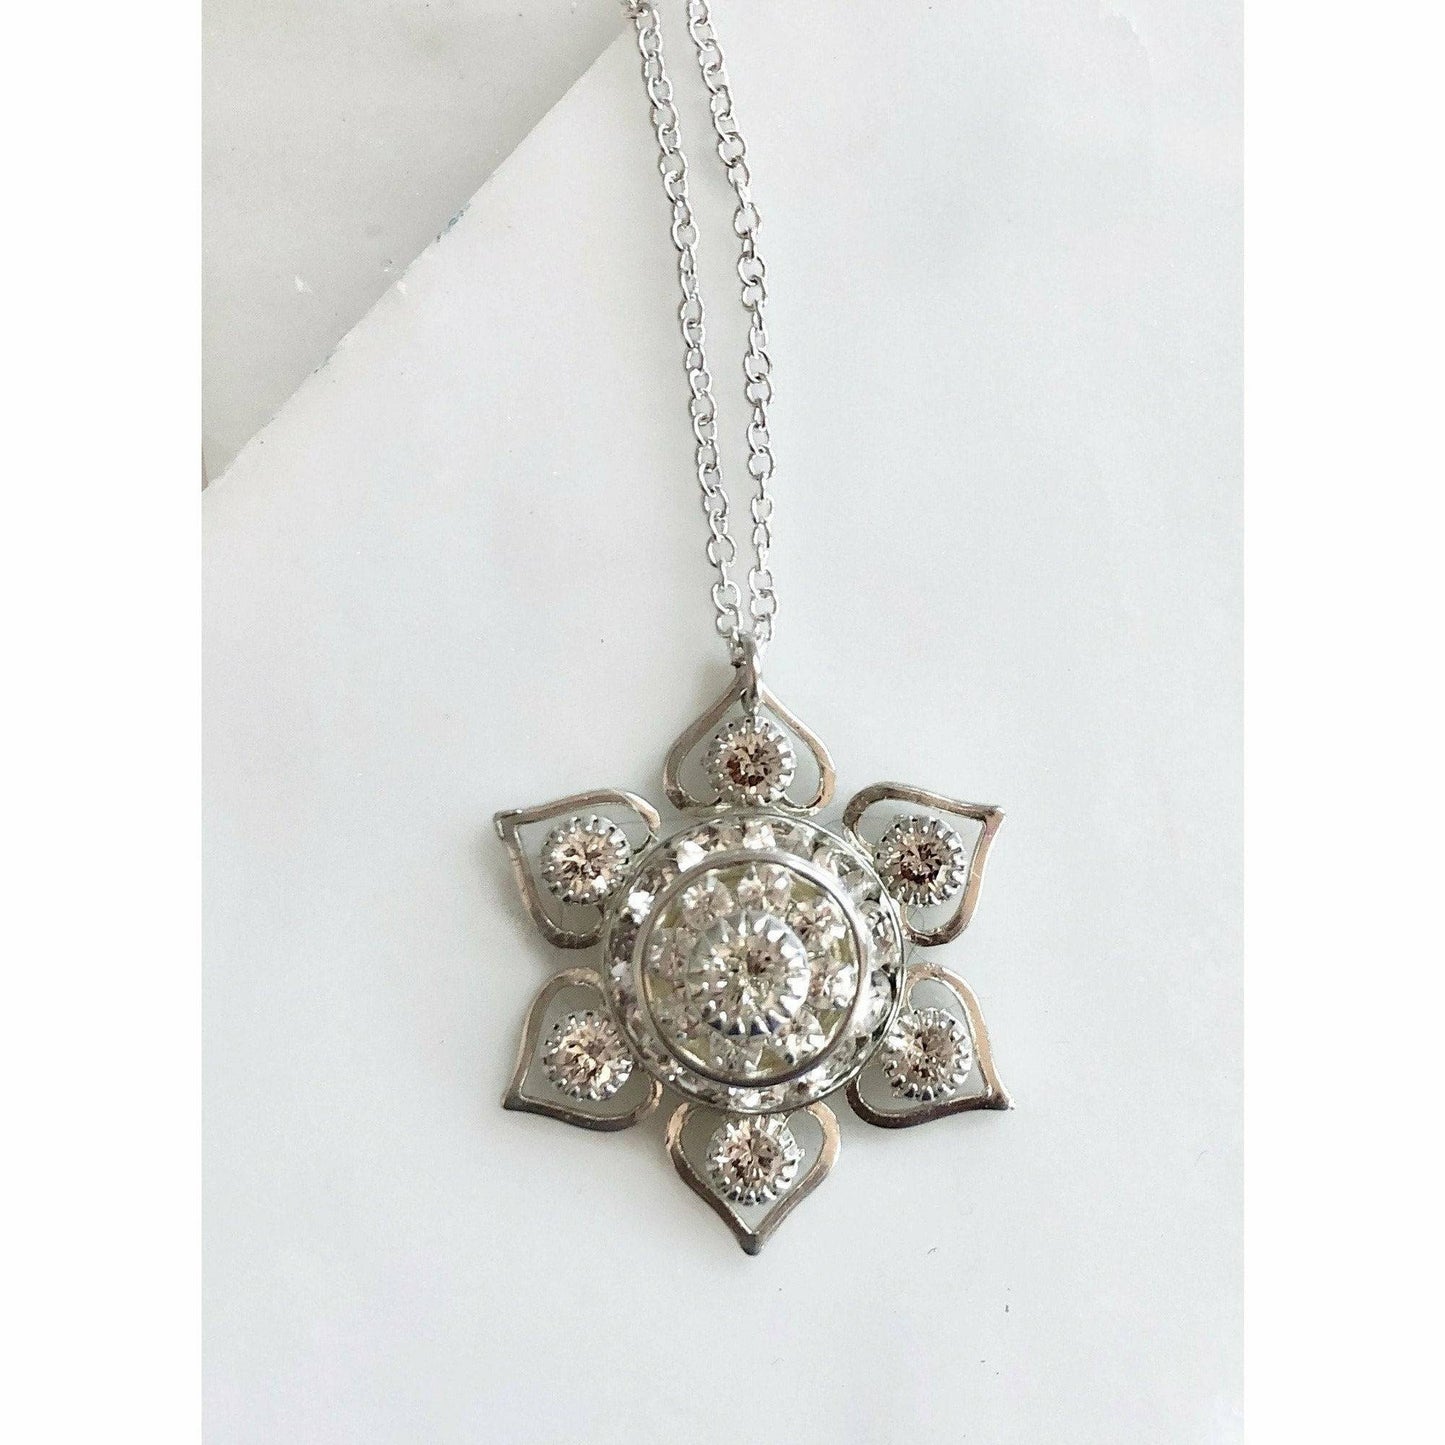 Crystal snowflake necklaces